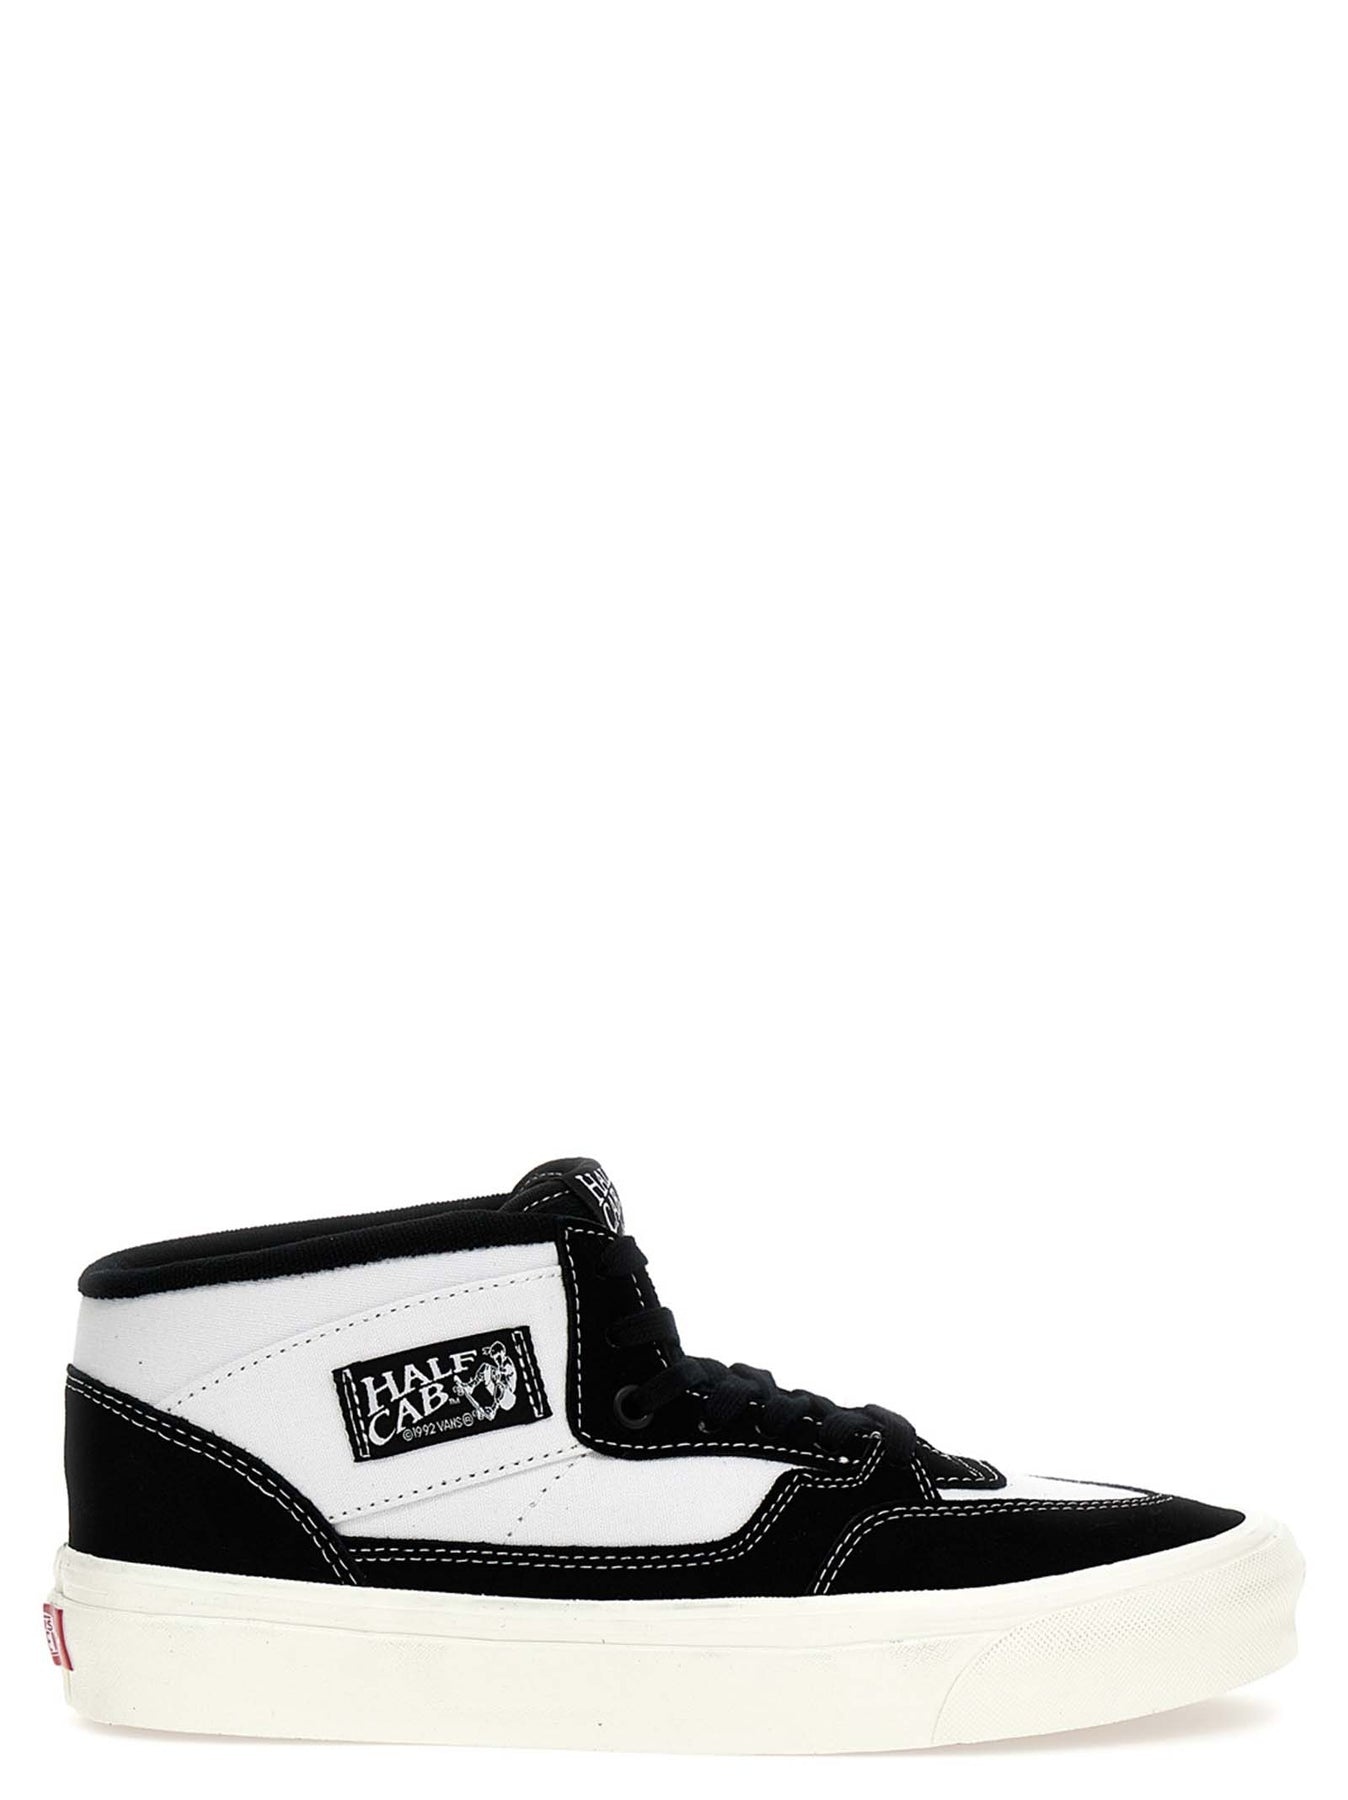 Half Cab 33 Dx Sneakers White/Black - 1